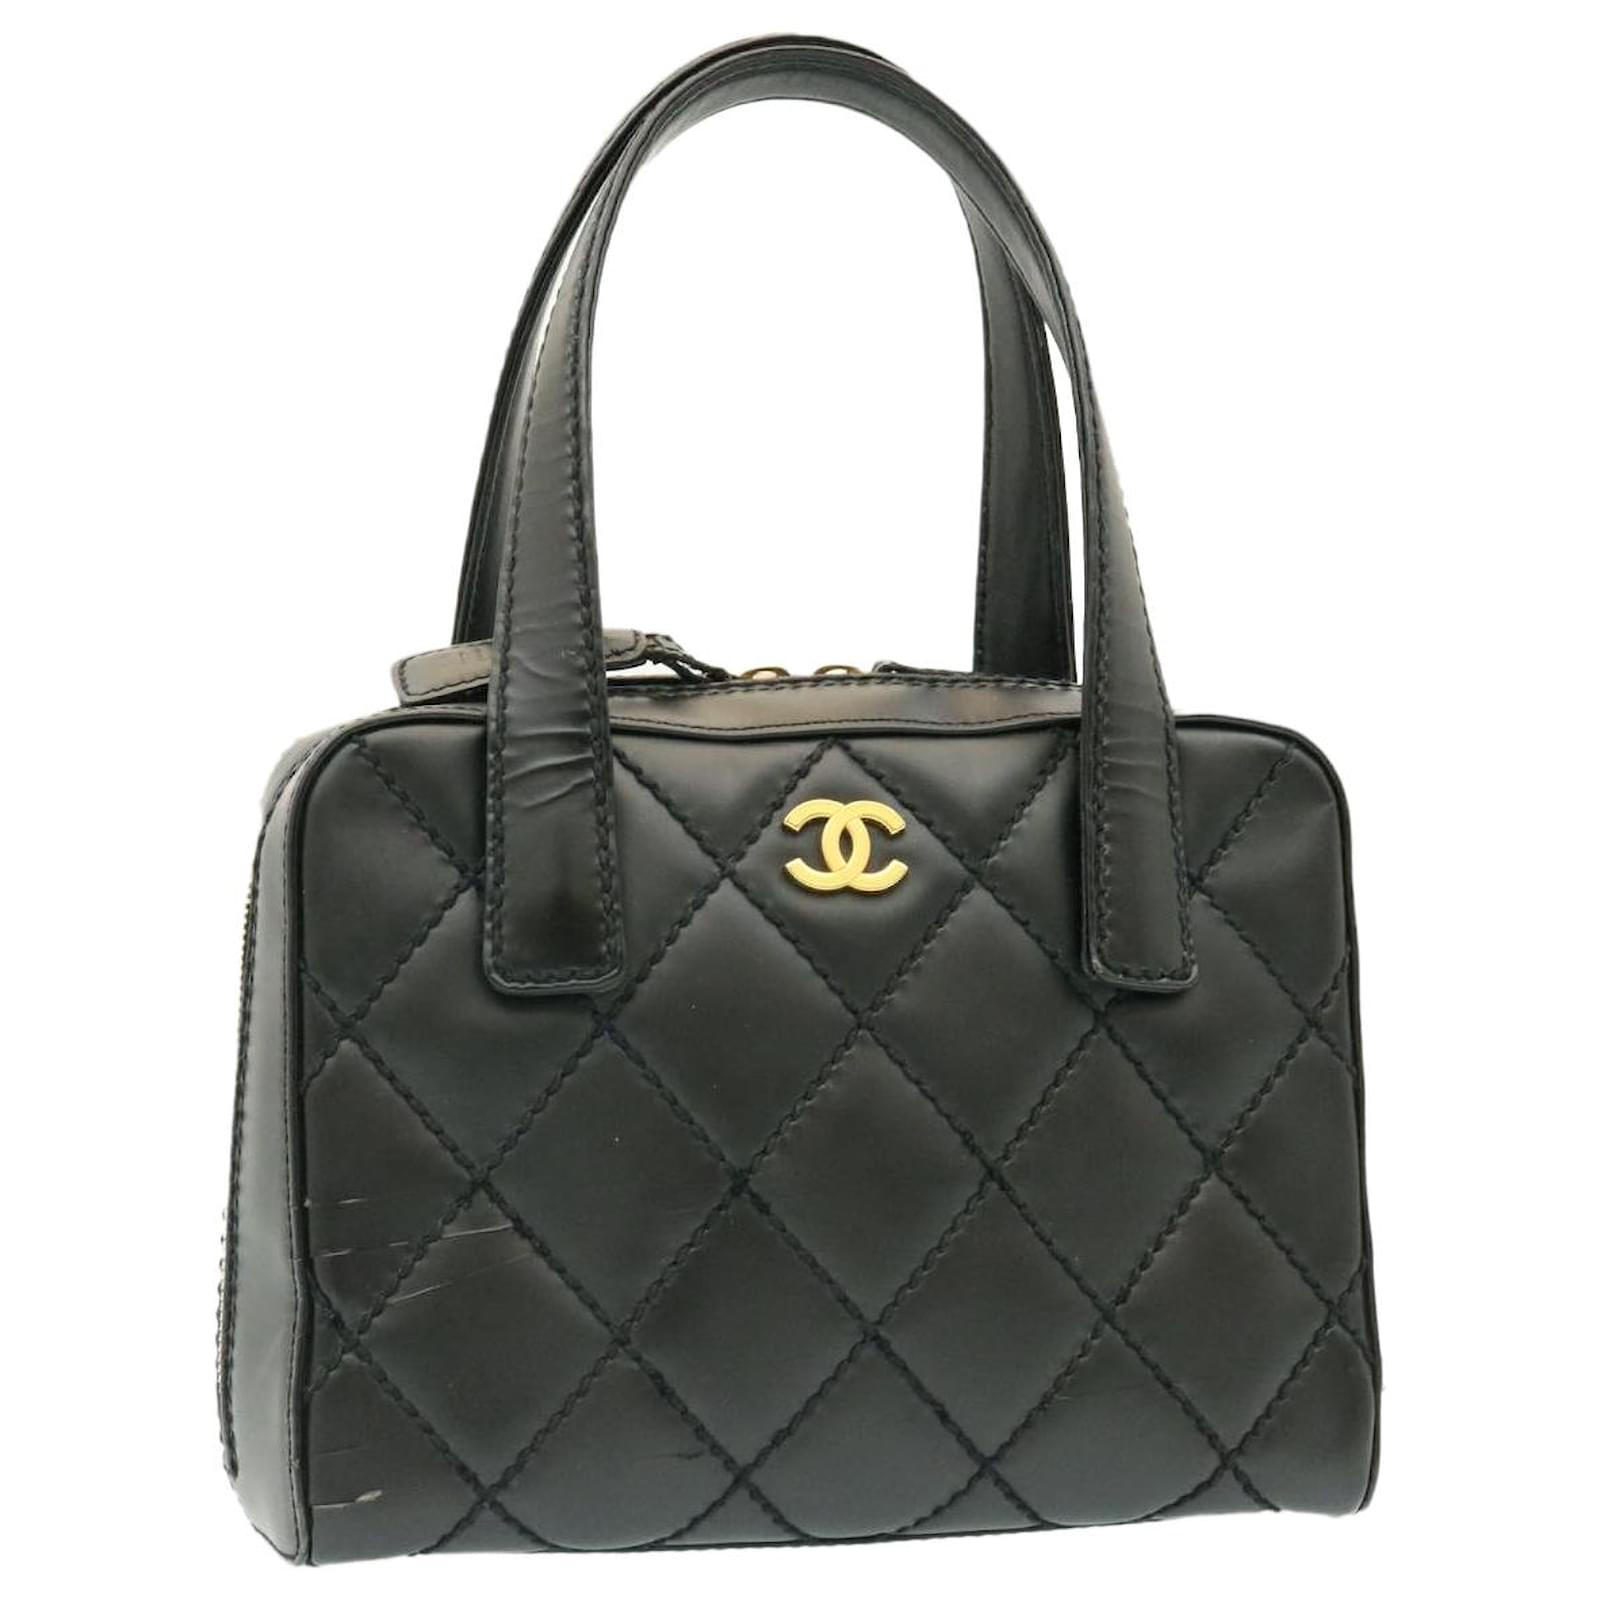 Chanel Wild Stitch Leather Handbag, Chanel Handbags